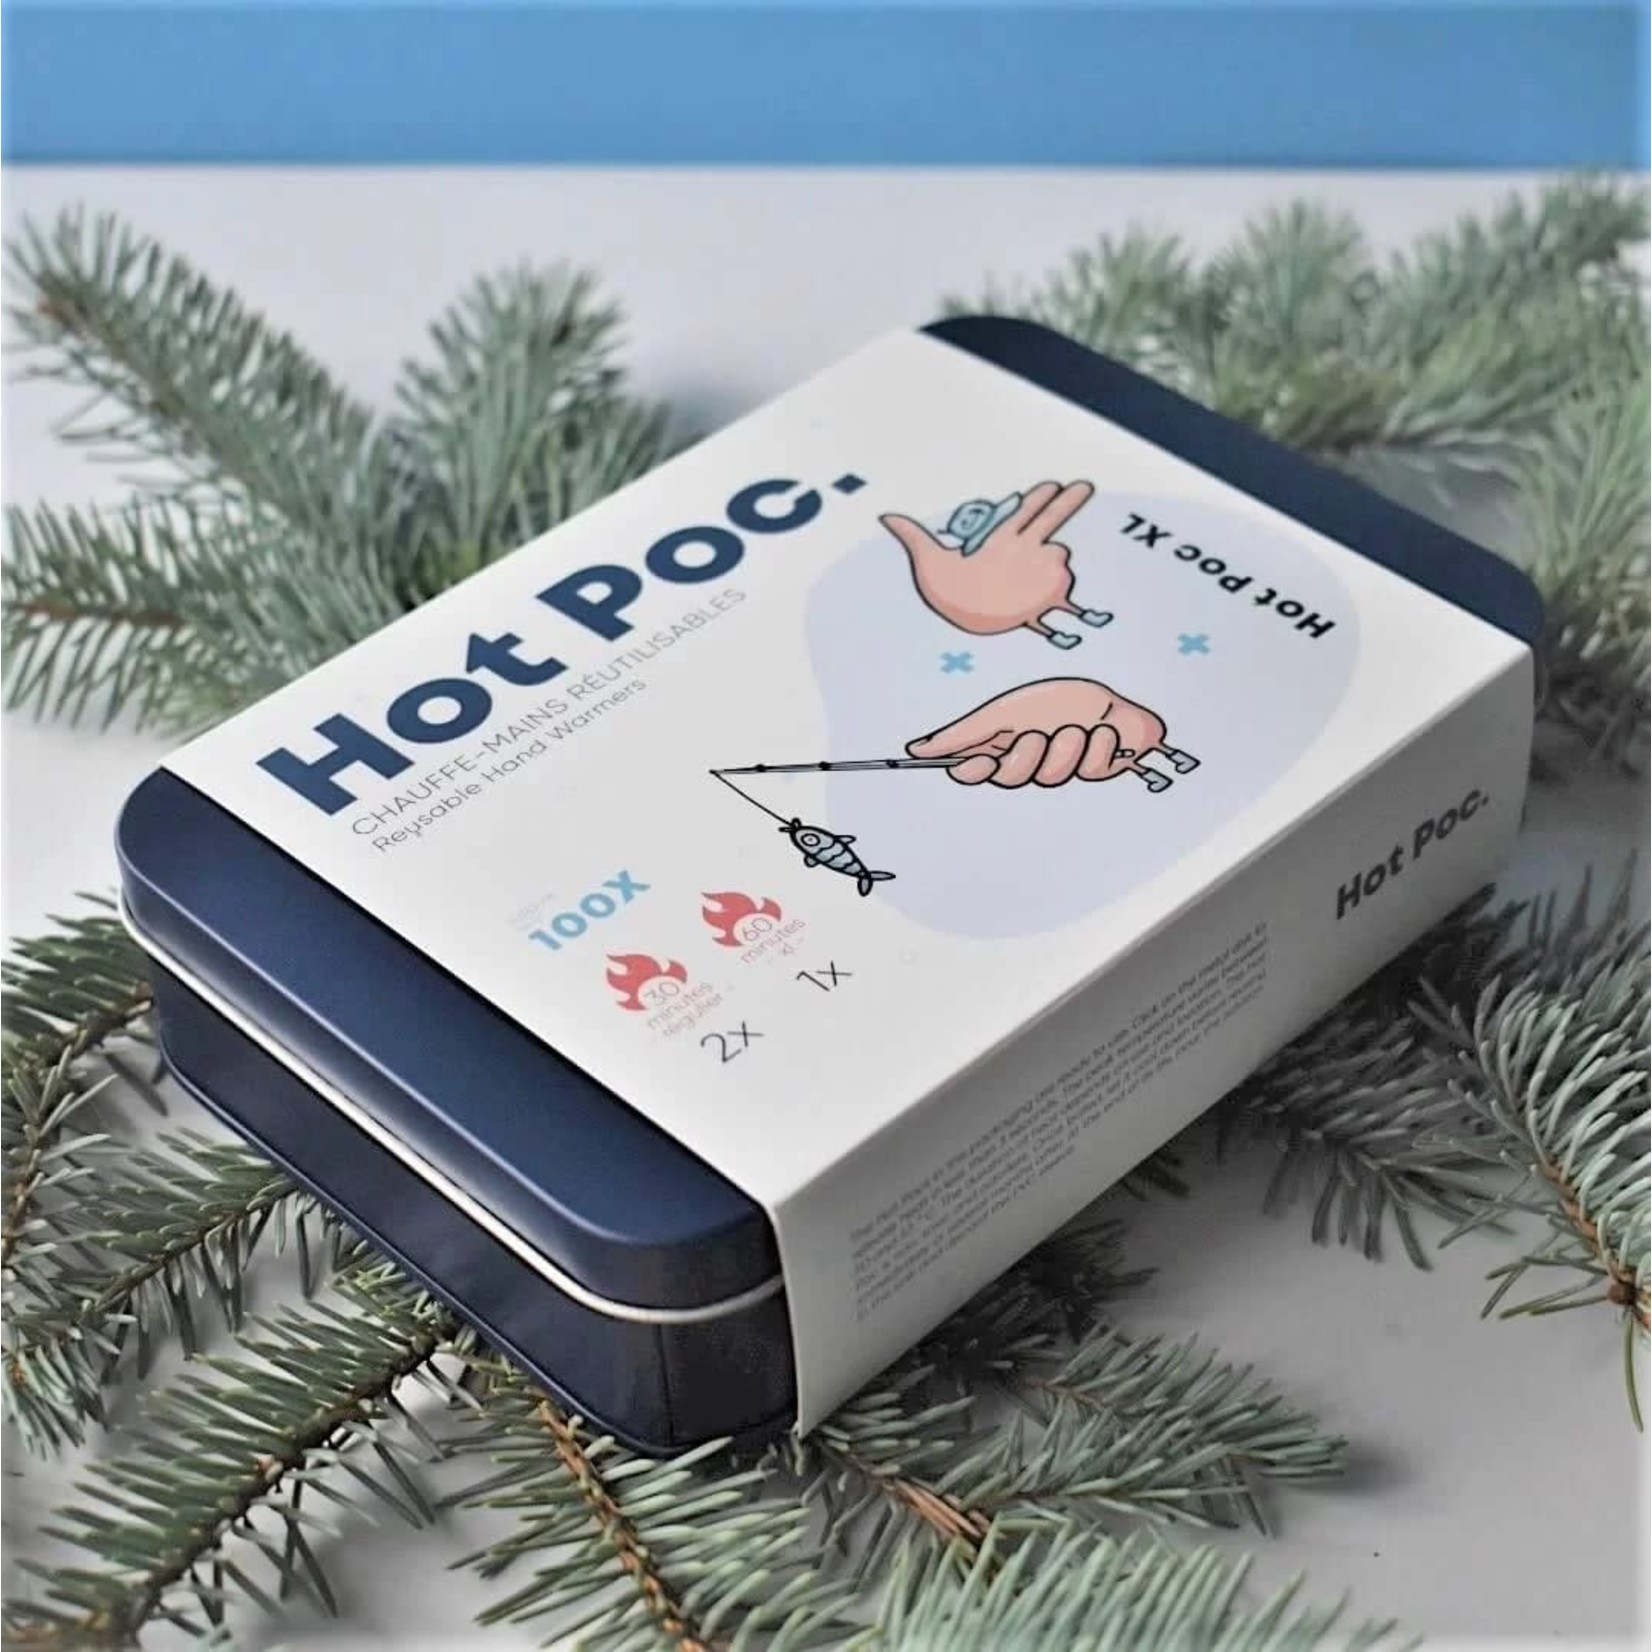 Hot Poc Case (2 regular and XL) – Hot Poc Reusable Hand Warmers